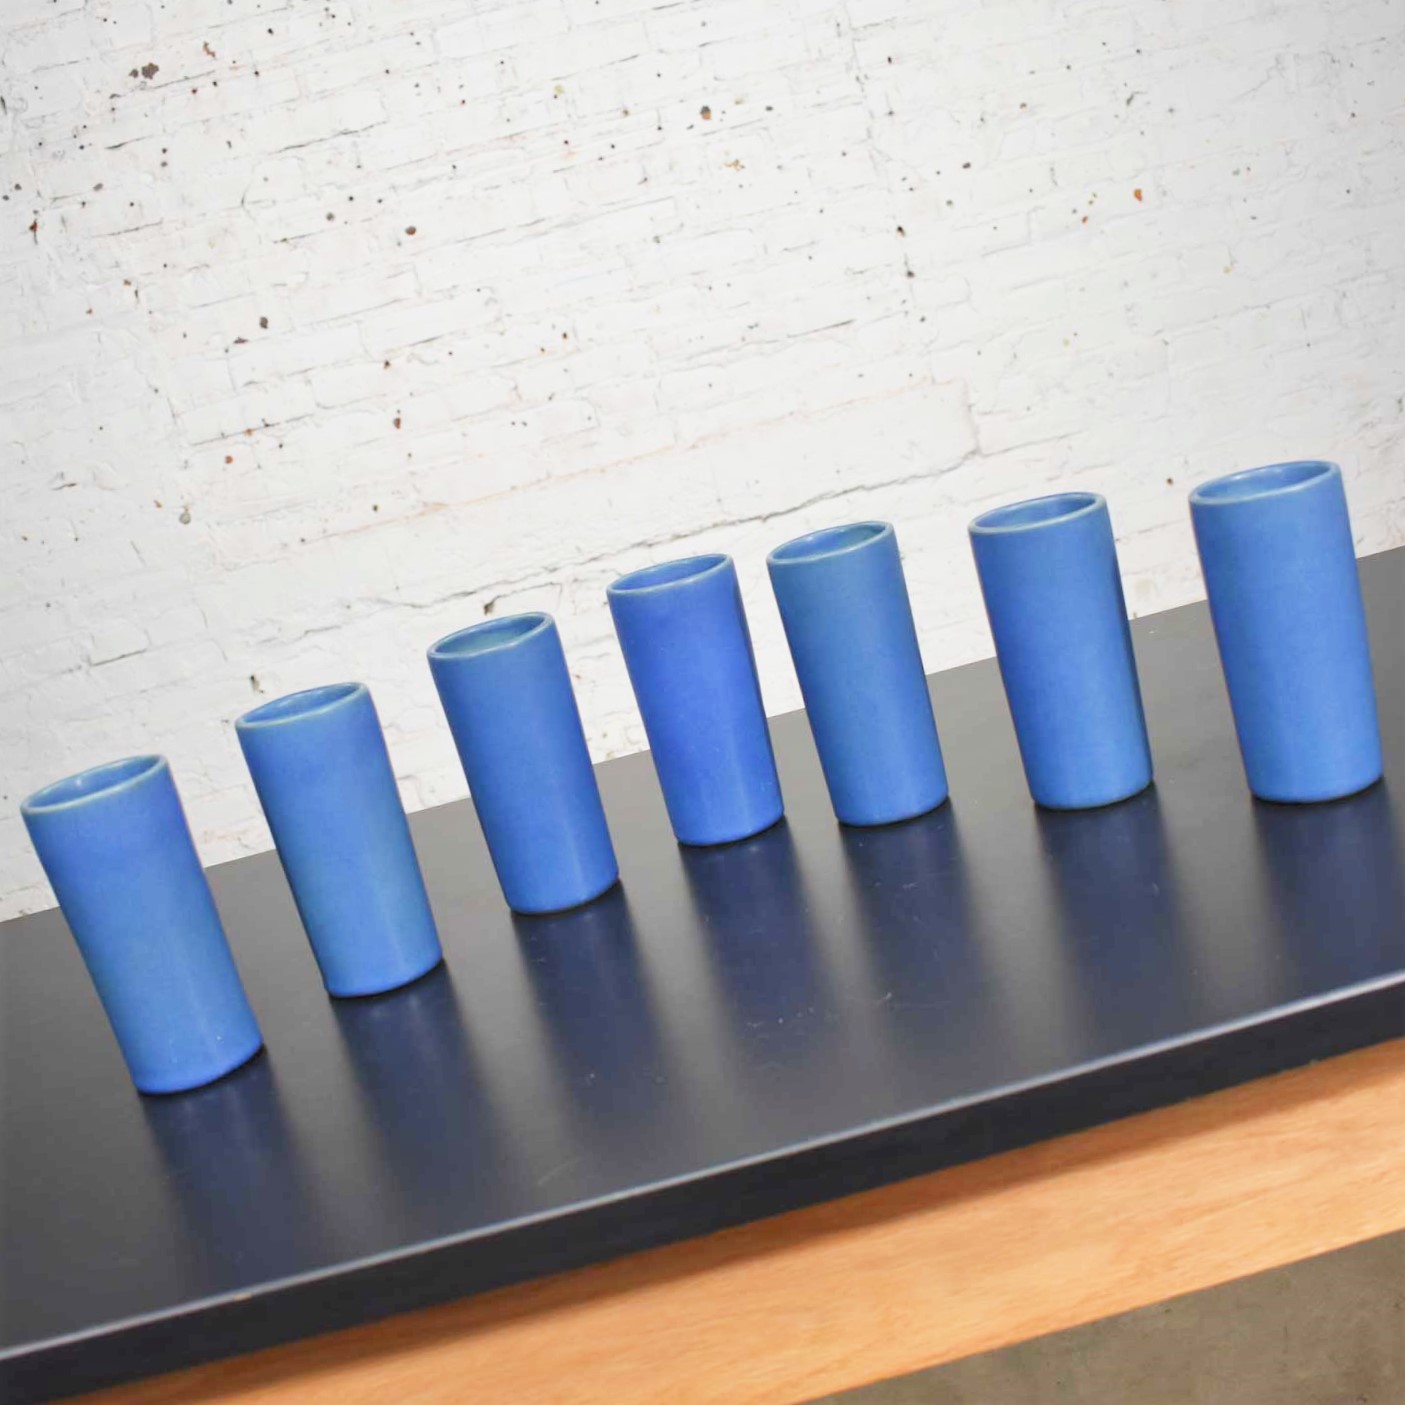 Van Briggle Pottery Dark Blue Cylindrical Tumblers Set of Seven or Vases